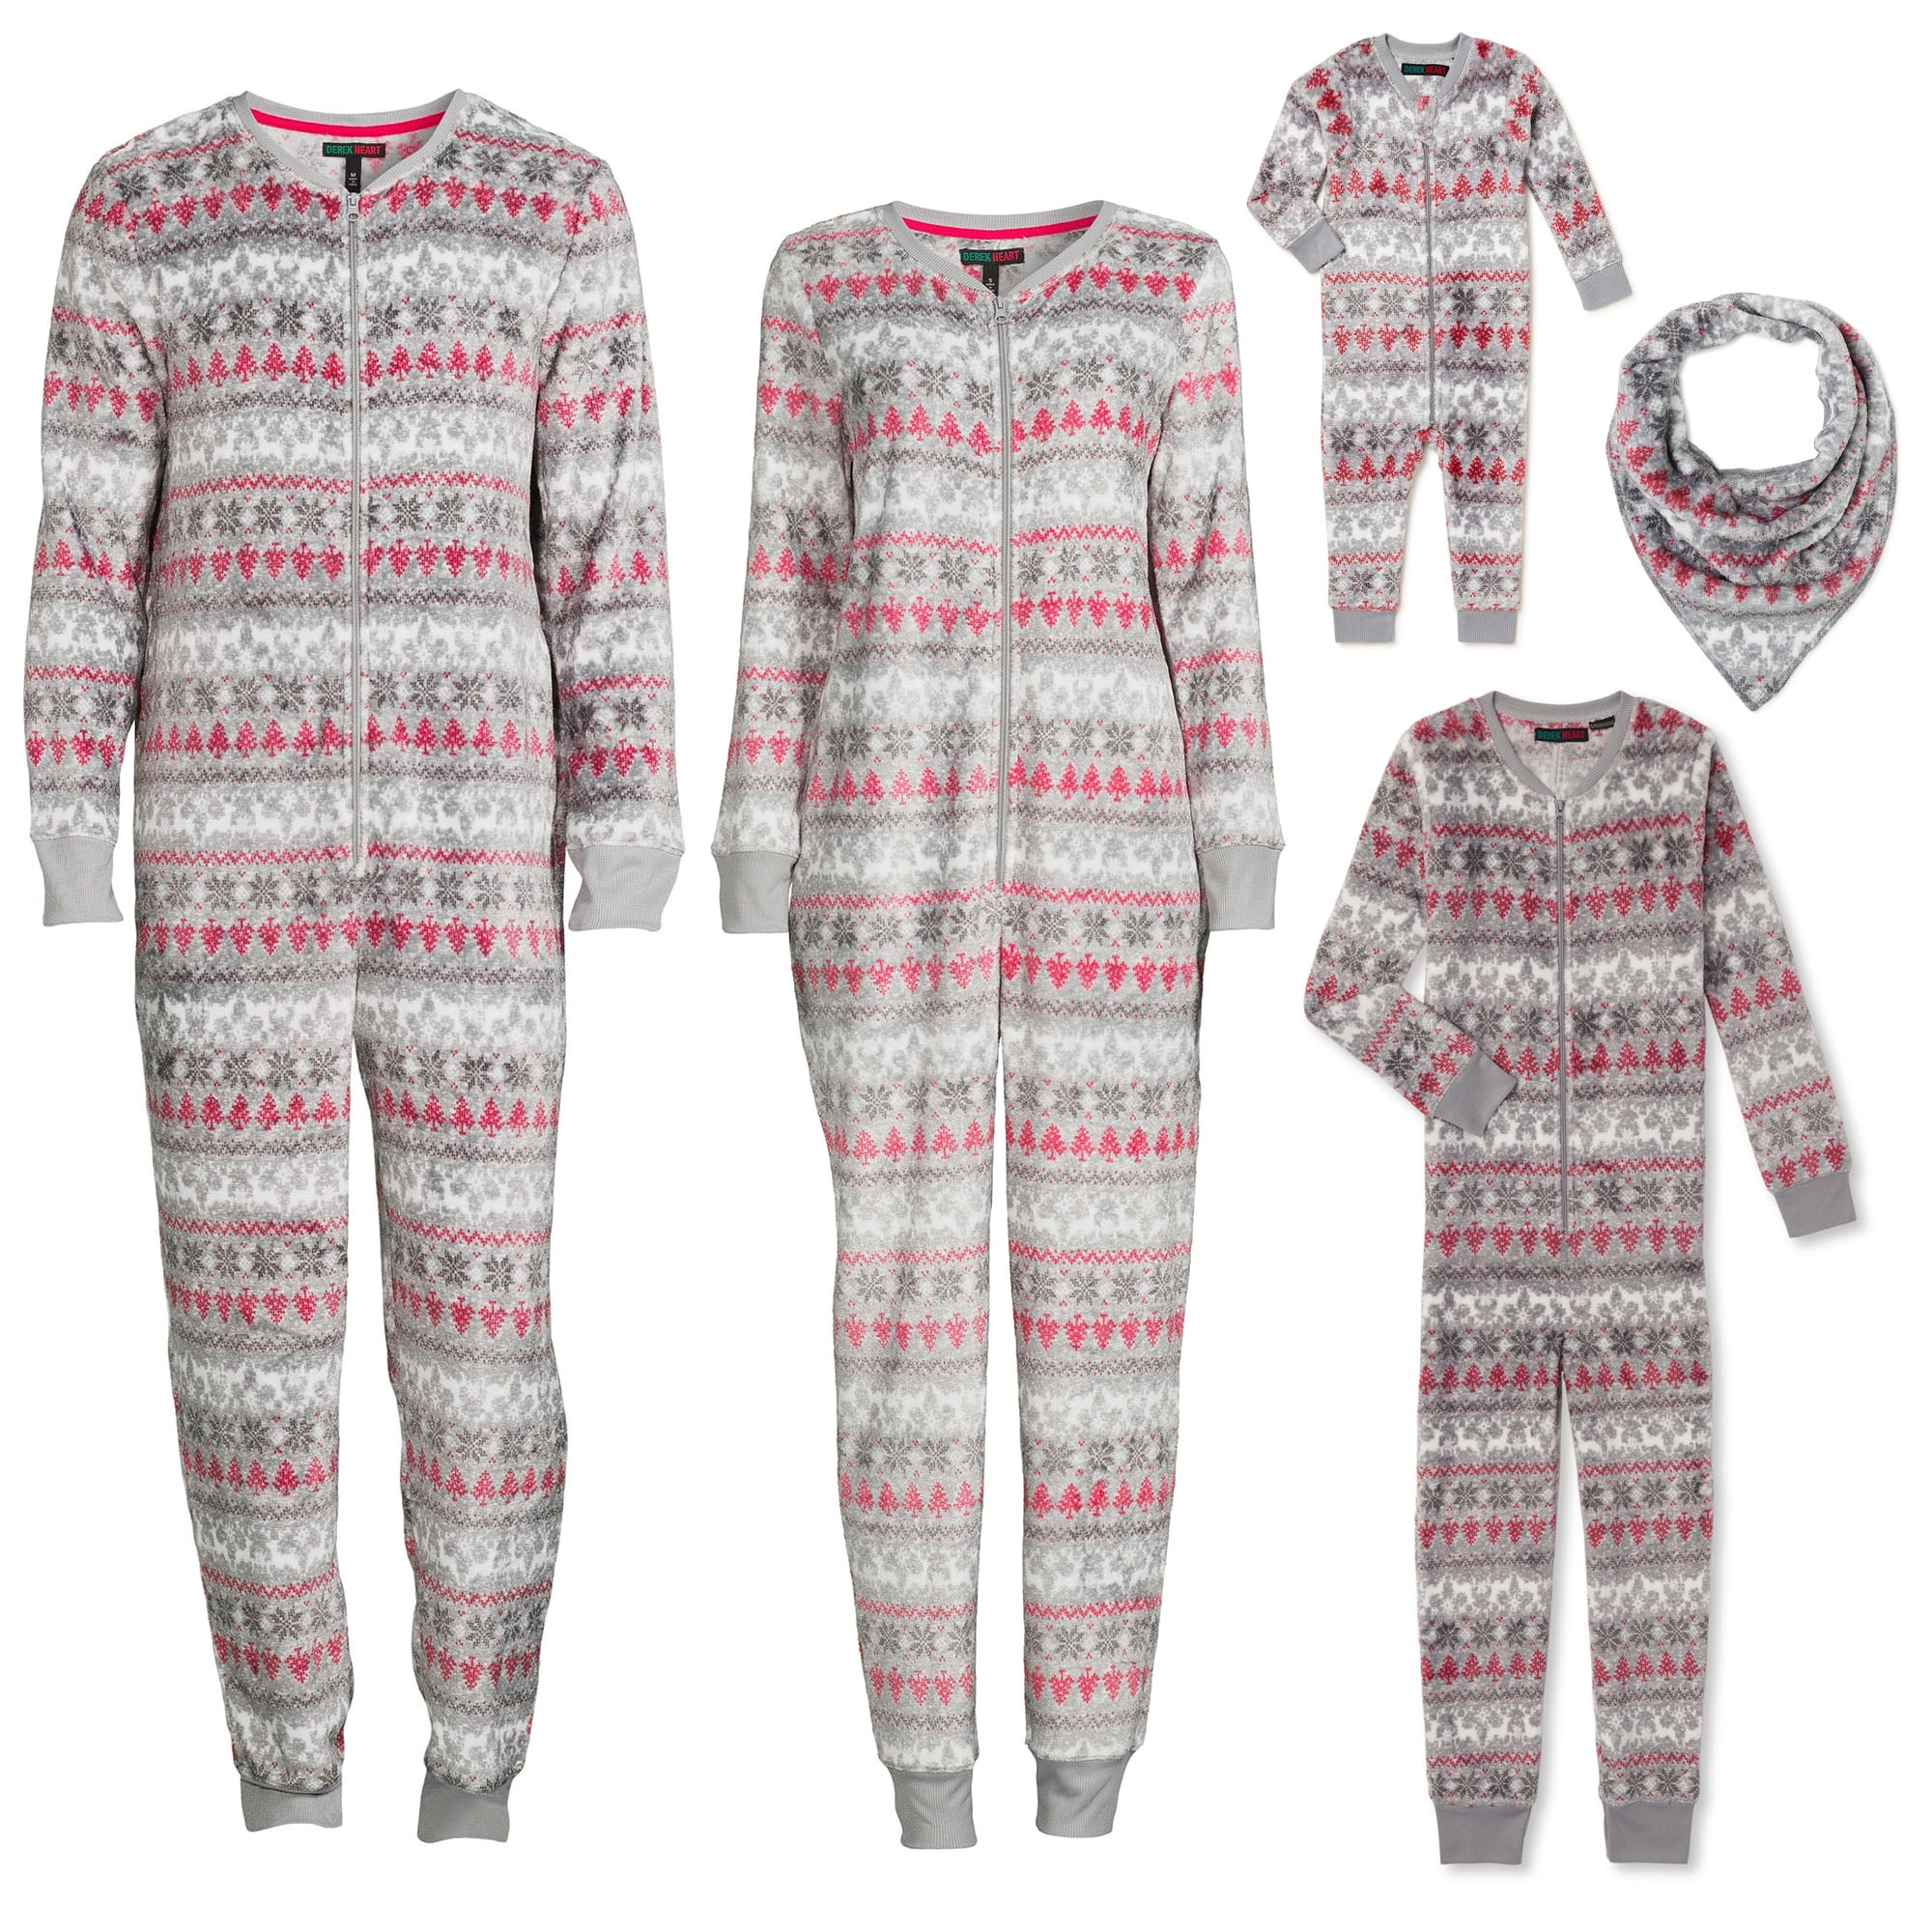 i-Smalls Mens Fairisle Festive Stag Design Warm Fleece Pyjama